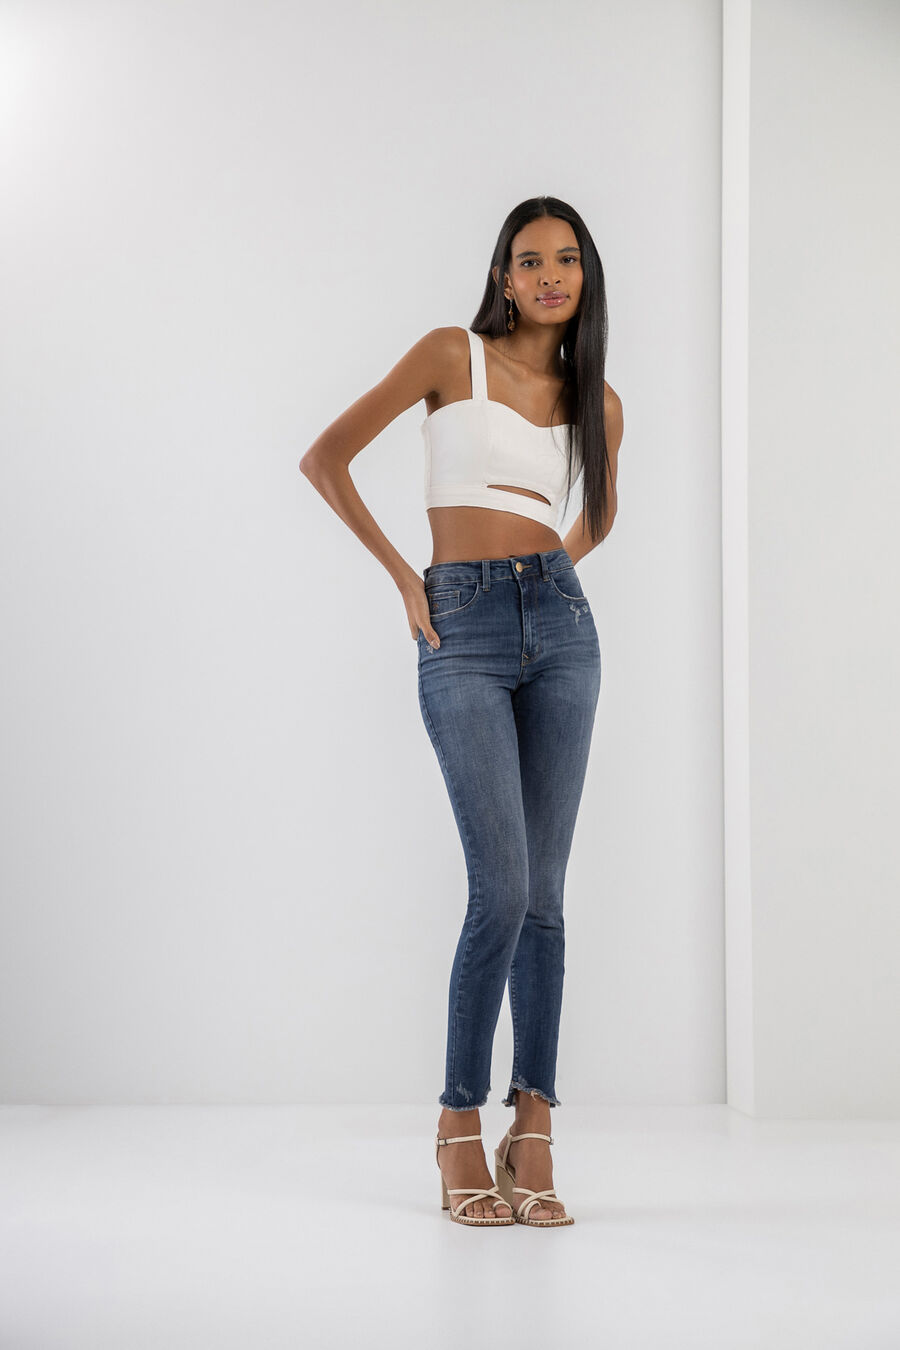 Calça Jeans Skinny Cropped Super Alta com Detalhe, JEANS, large.